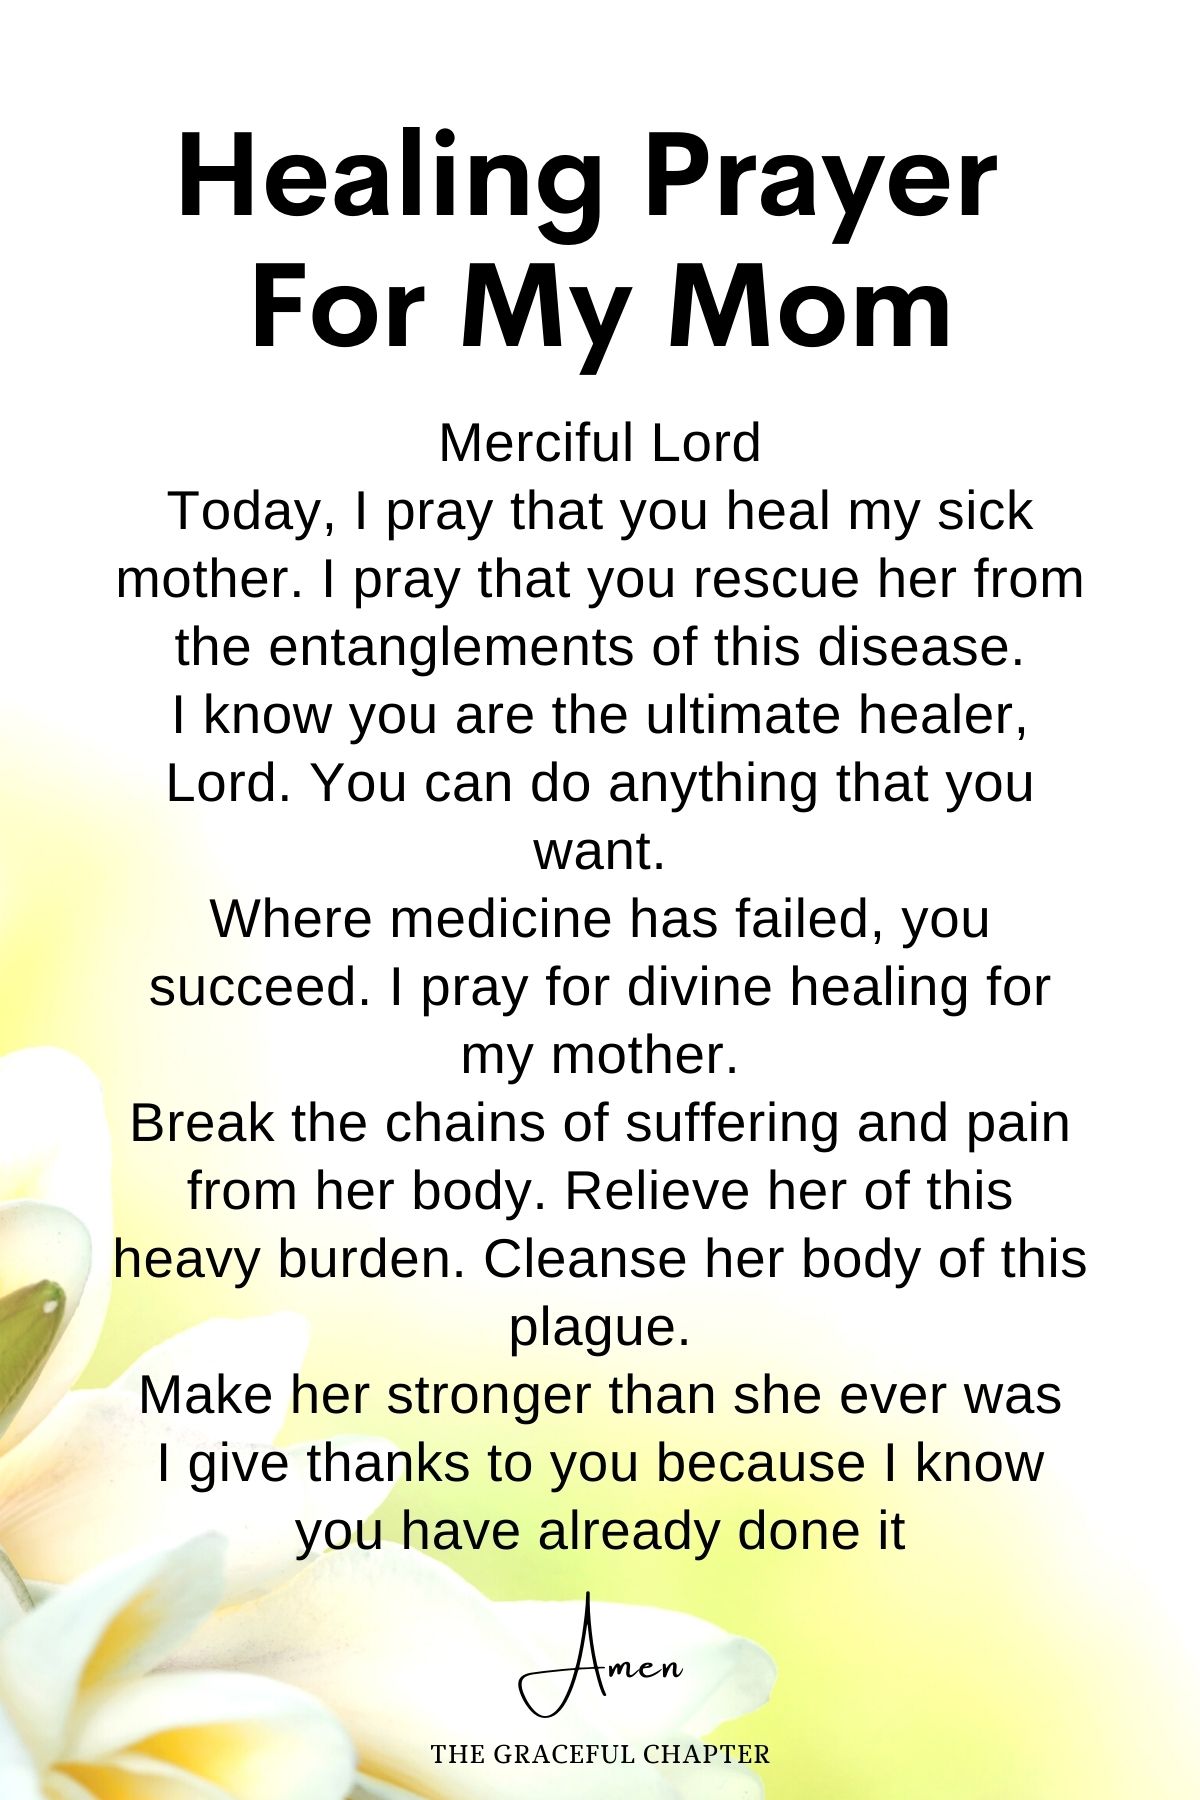 Healing prayer for my mom